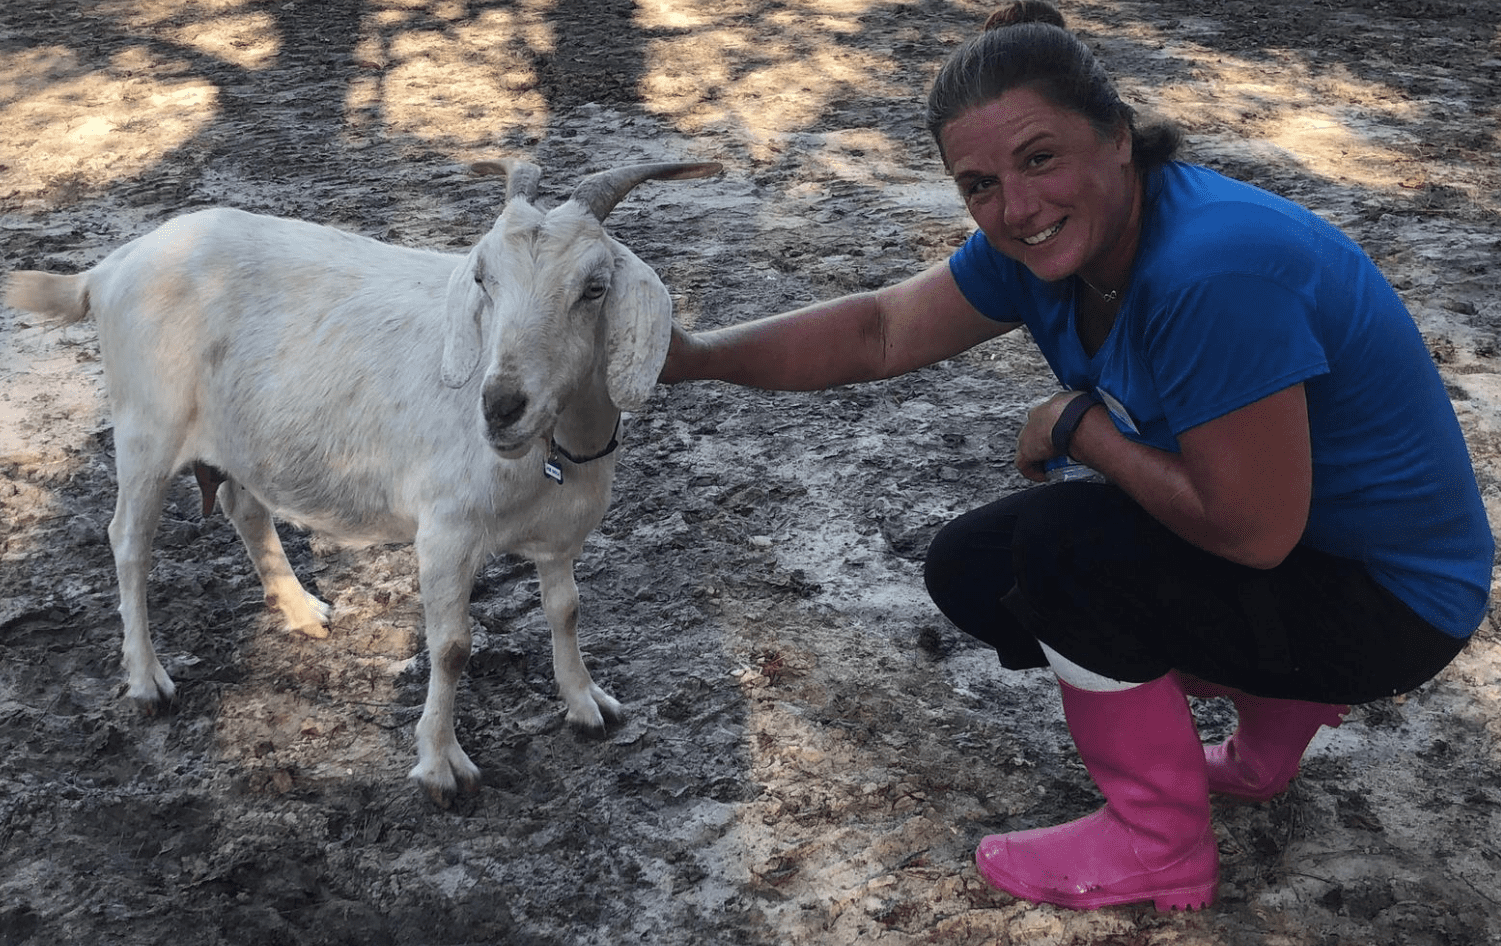 Petting baby goat